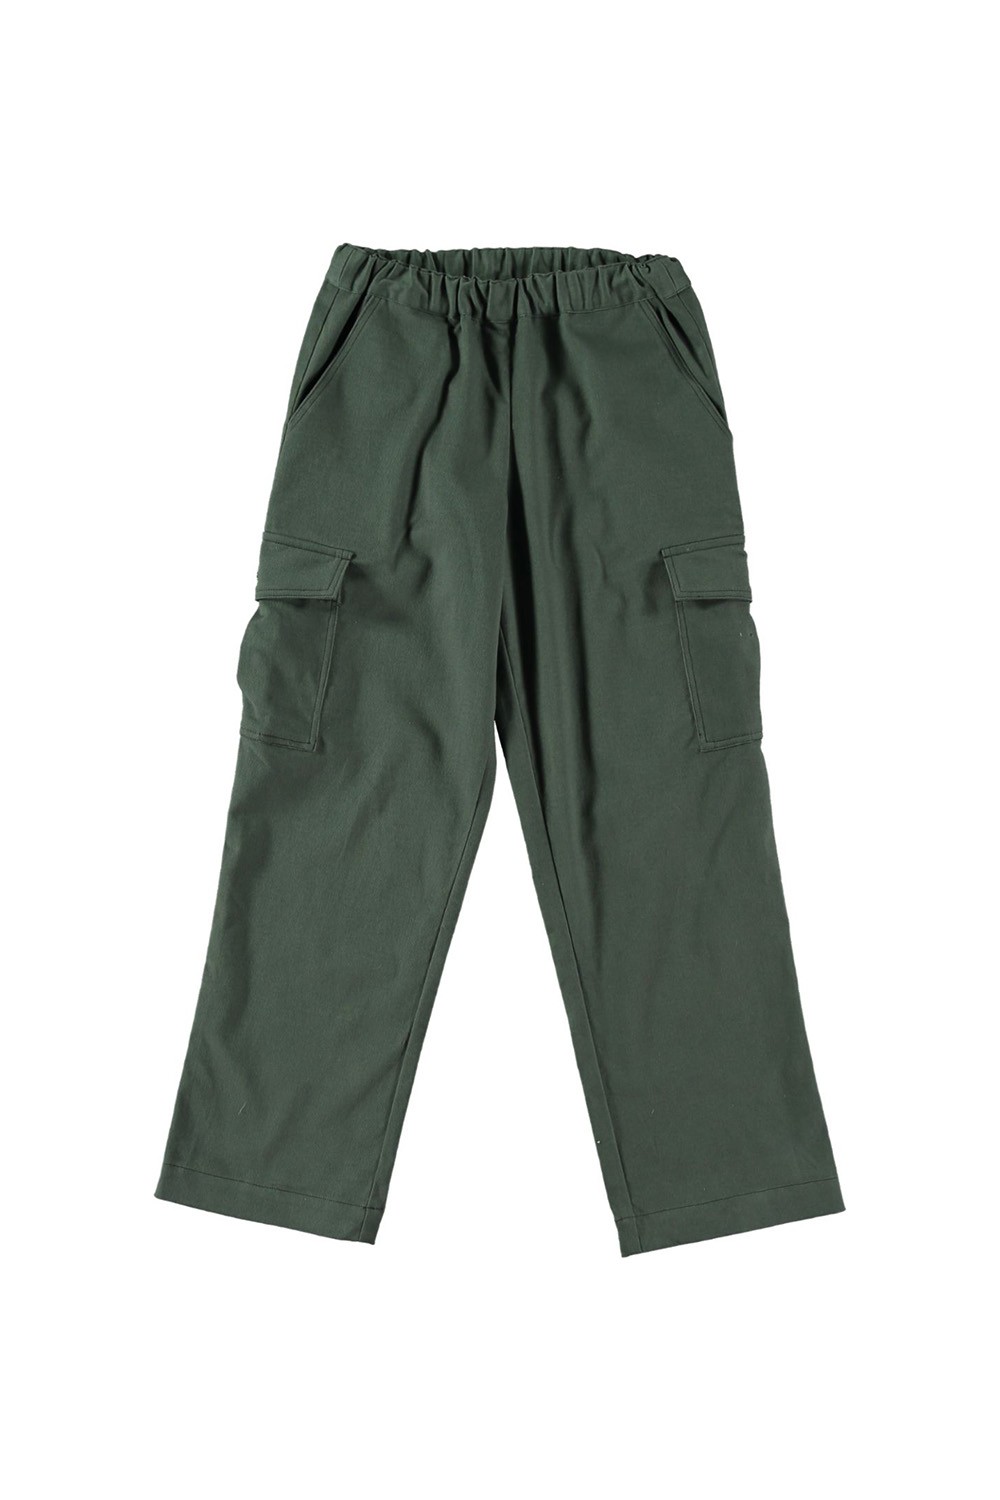 Pantalon enfant Baroudeur en toile de coton bio vert